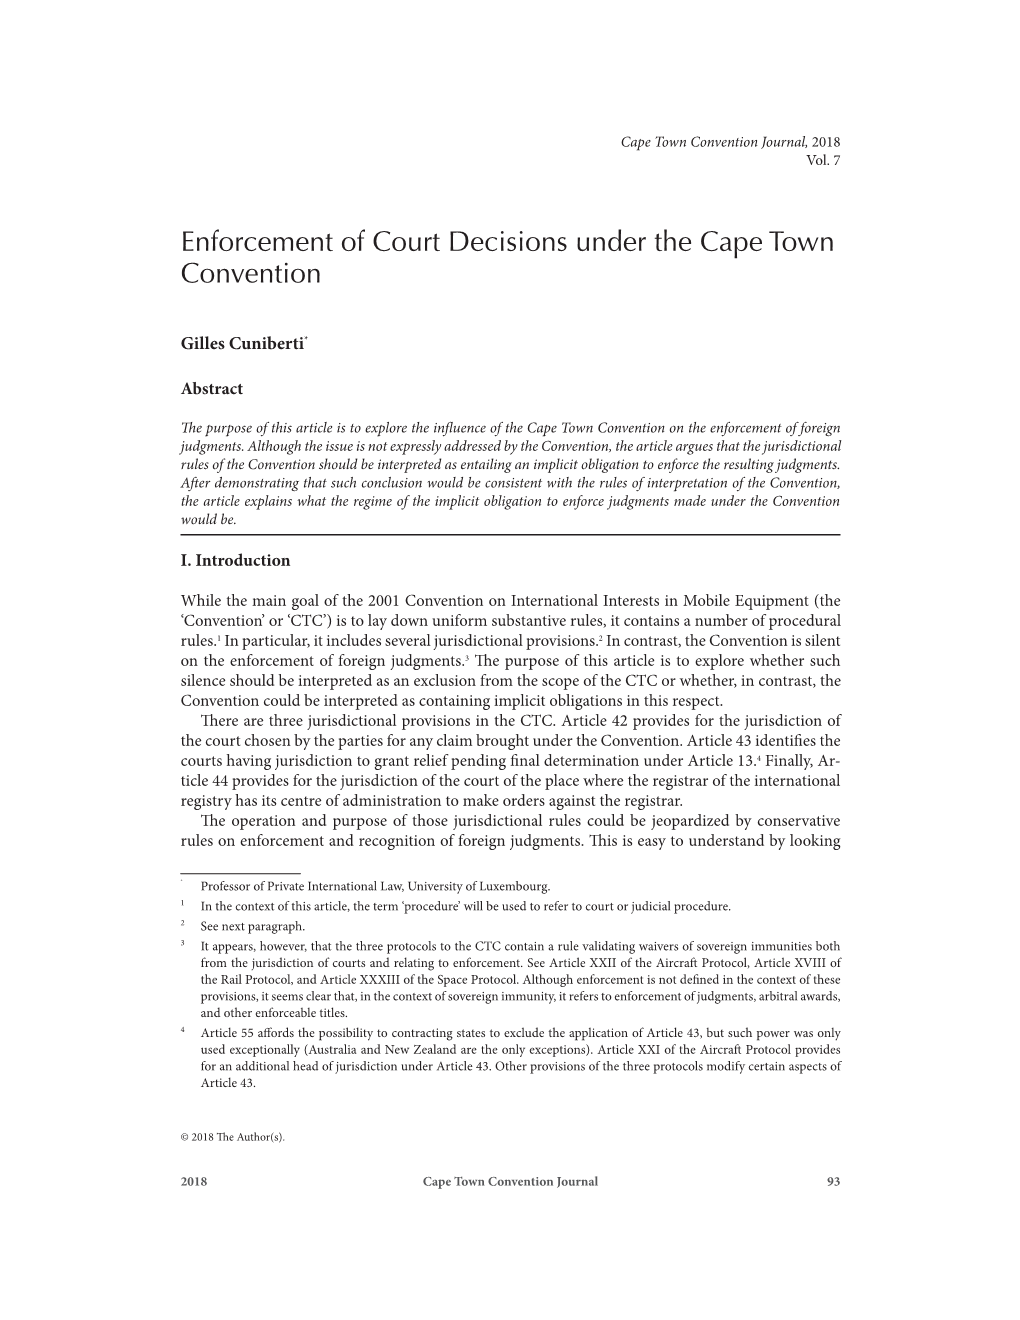 Enforcement of Court Decisions Under the Cape Town Convention